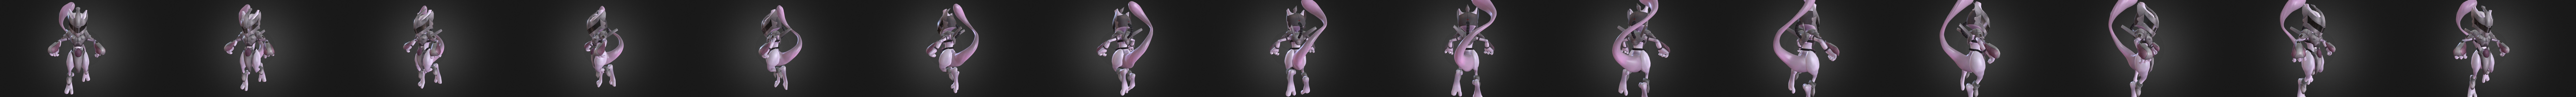 Mobile - Pokemon GO - 150 Armored Mewtwo - Download Free 3D model by  Cubone0711 (@Cubone0711) [2ac5dee]